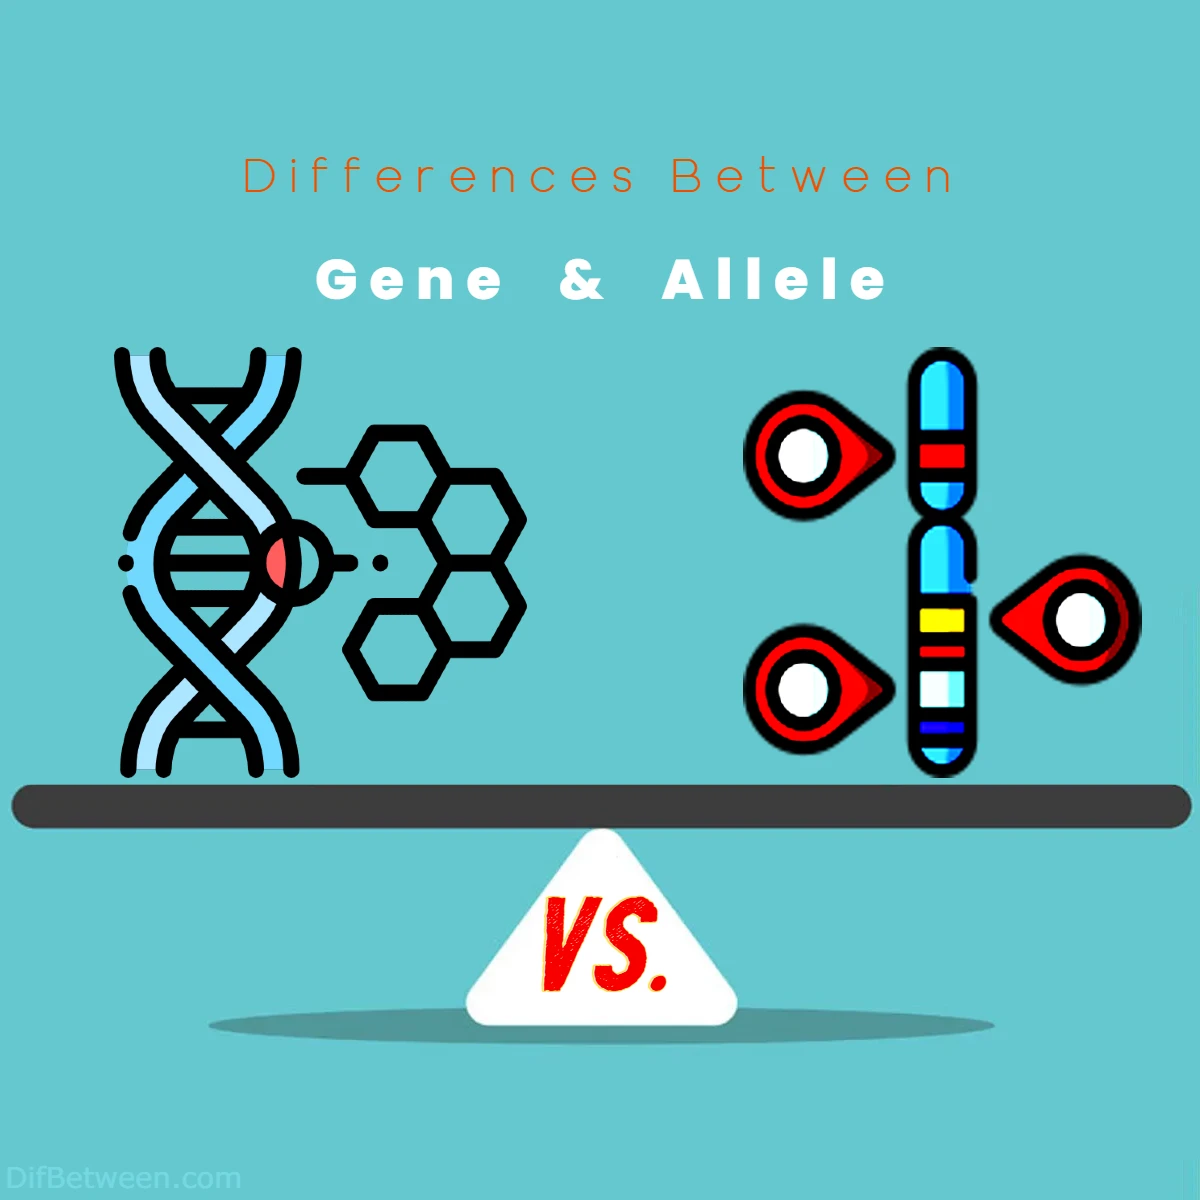 Differences Between Gene vs Allele